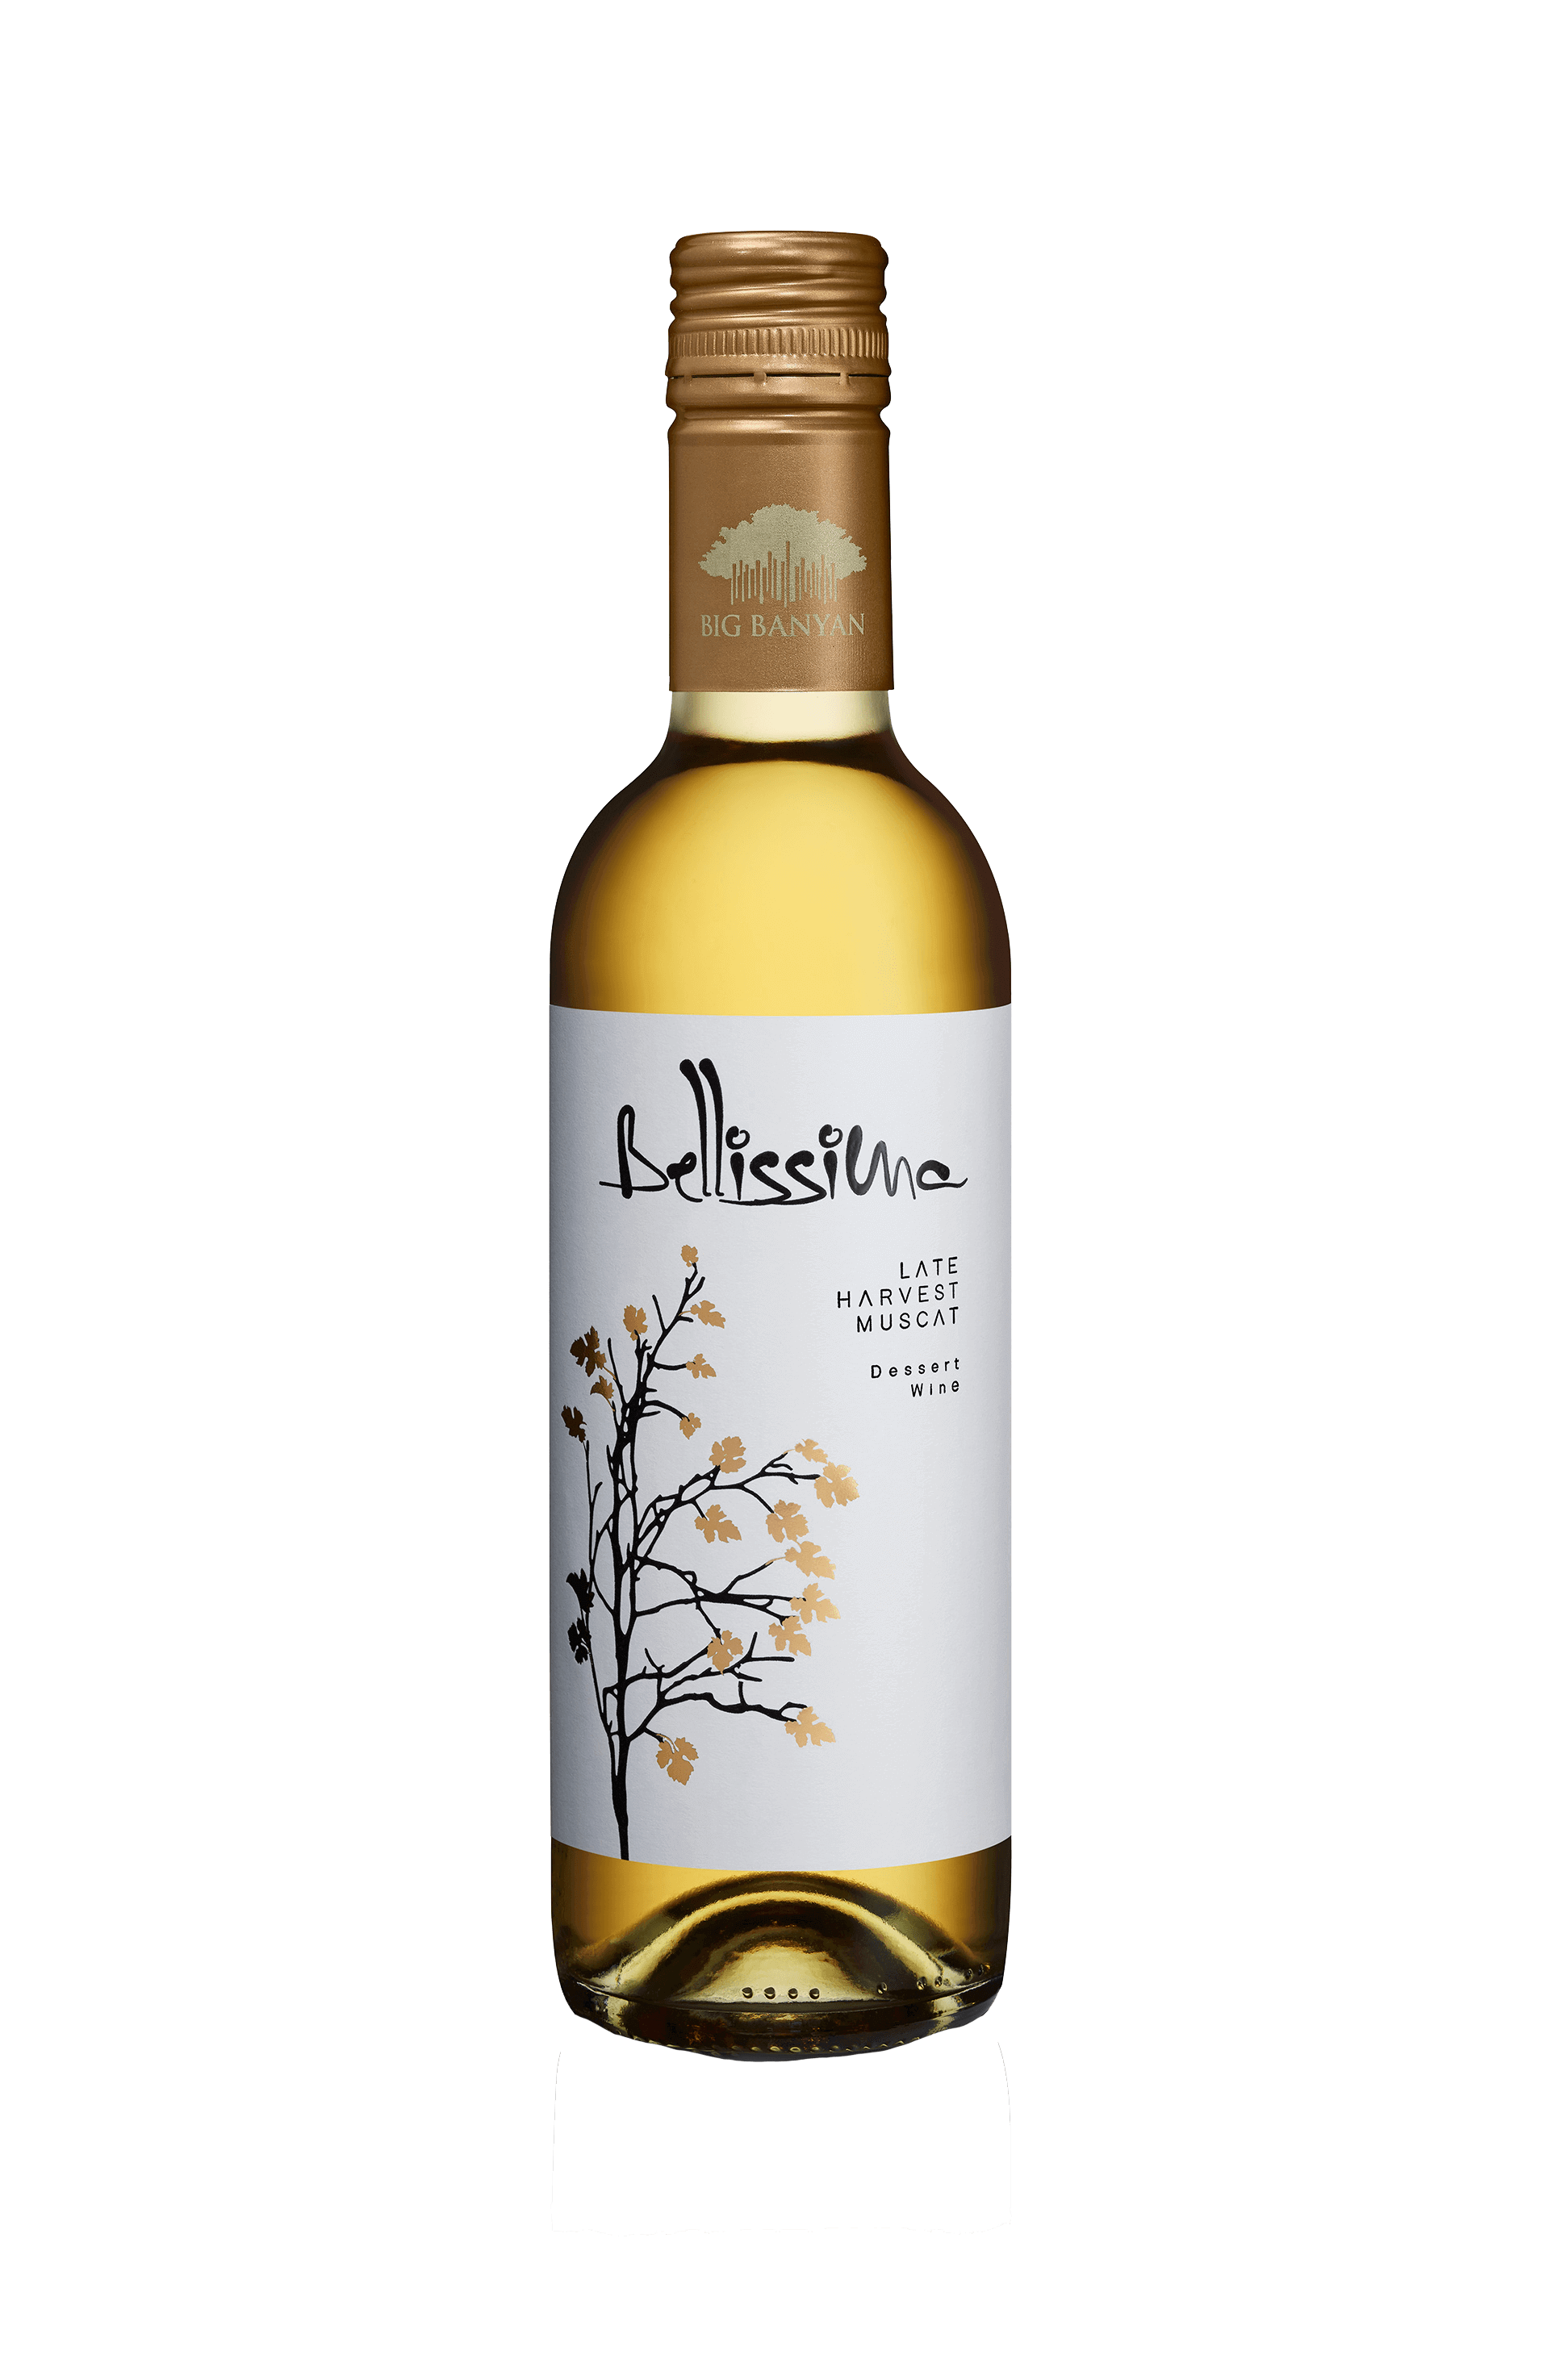 BigBanyan Wines - Bellissima